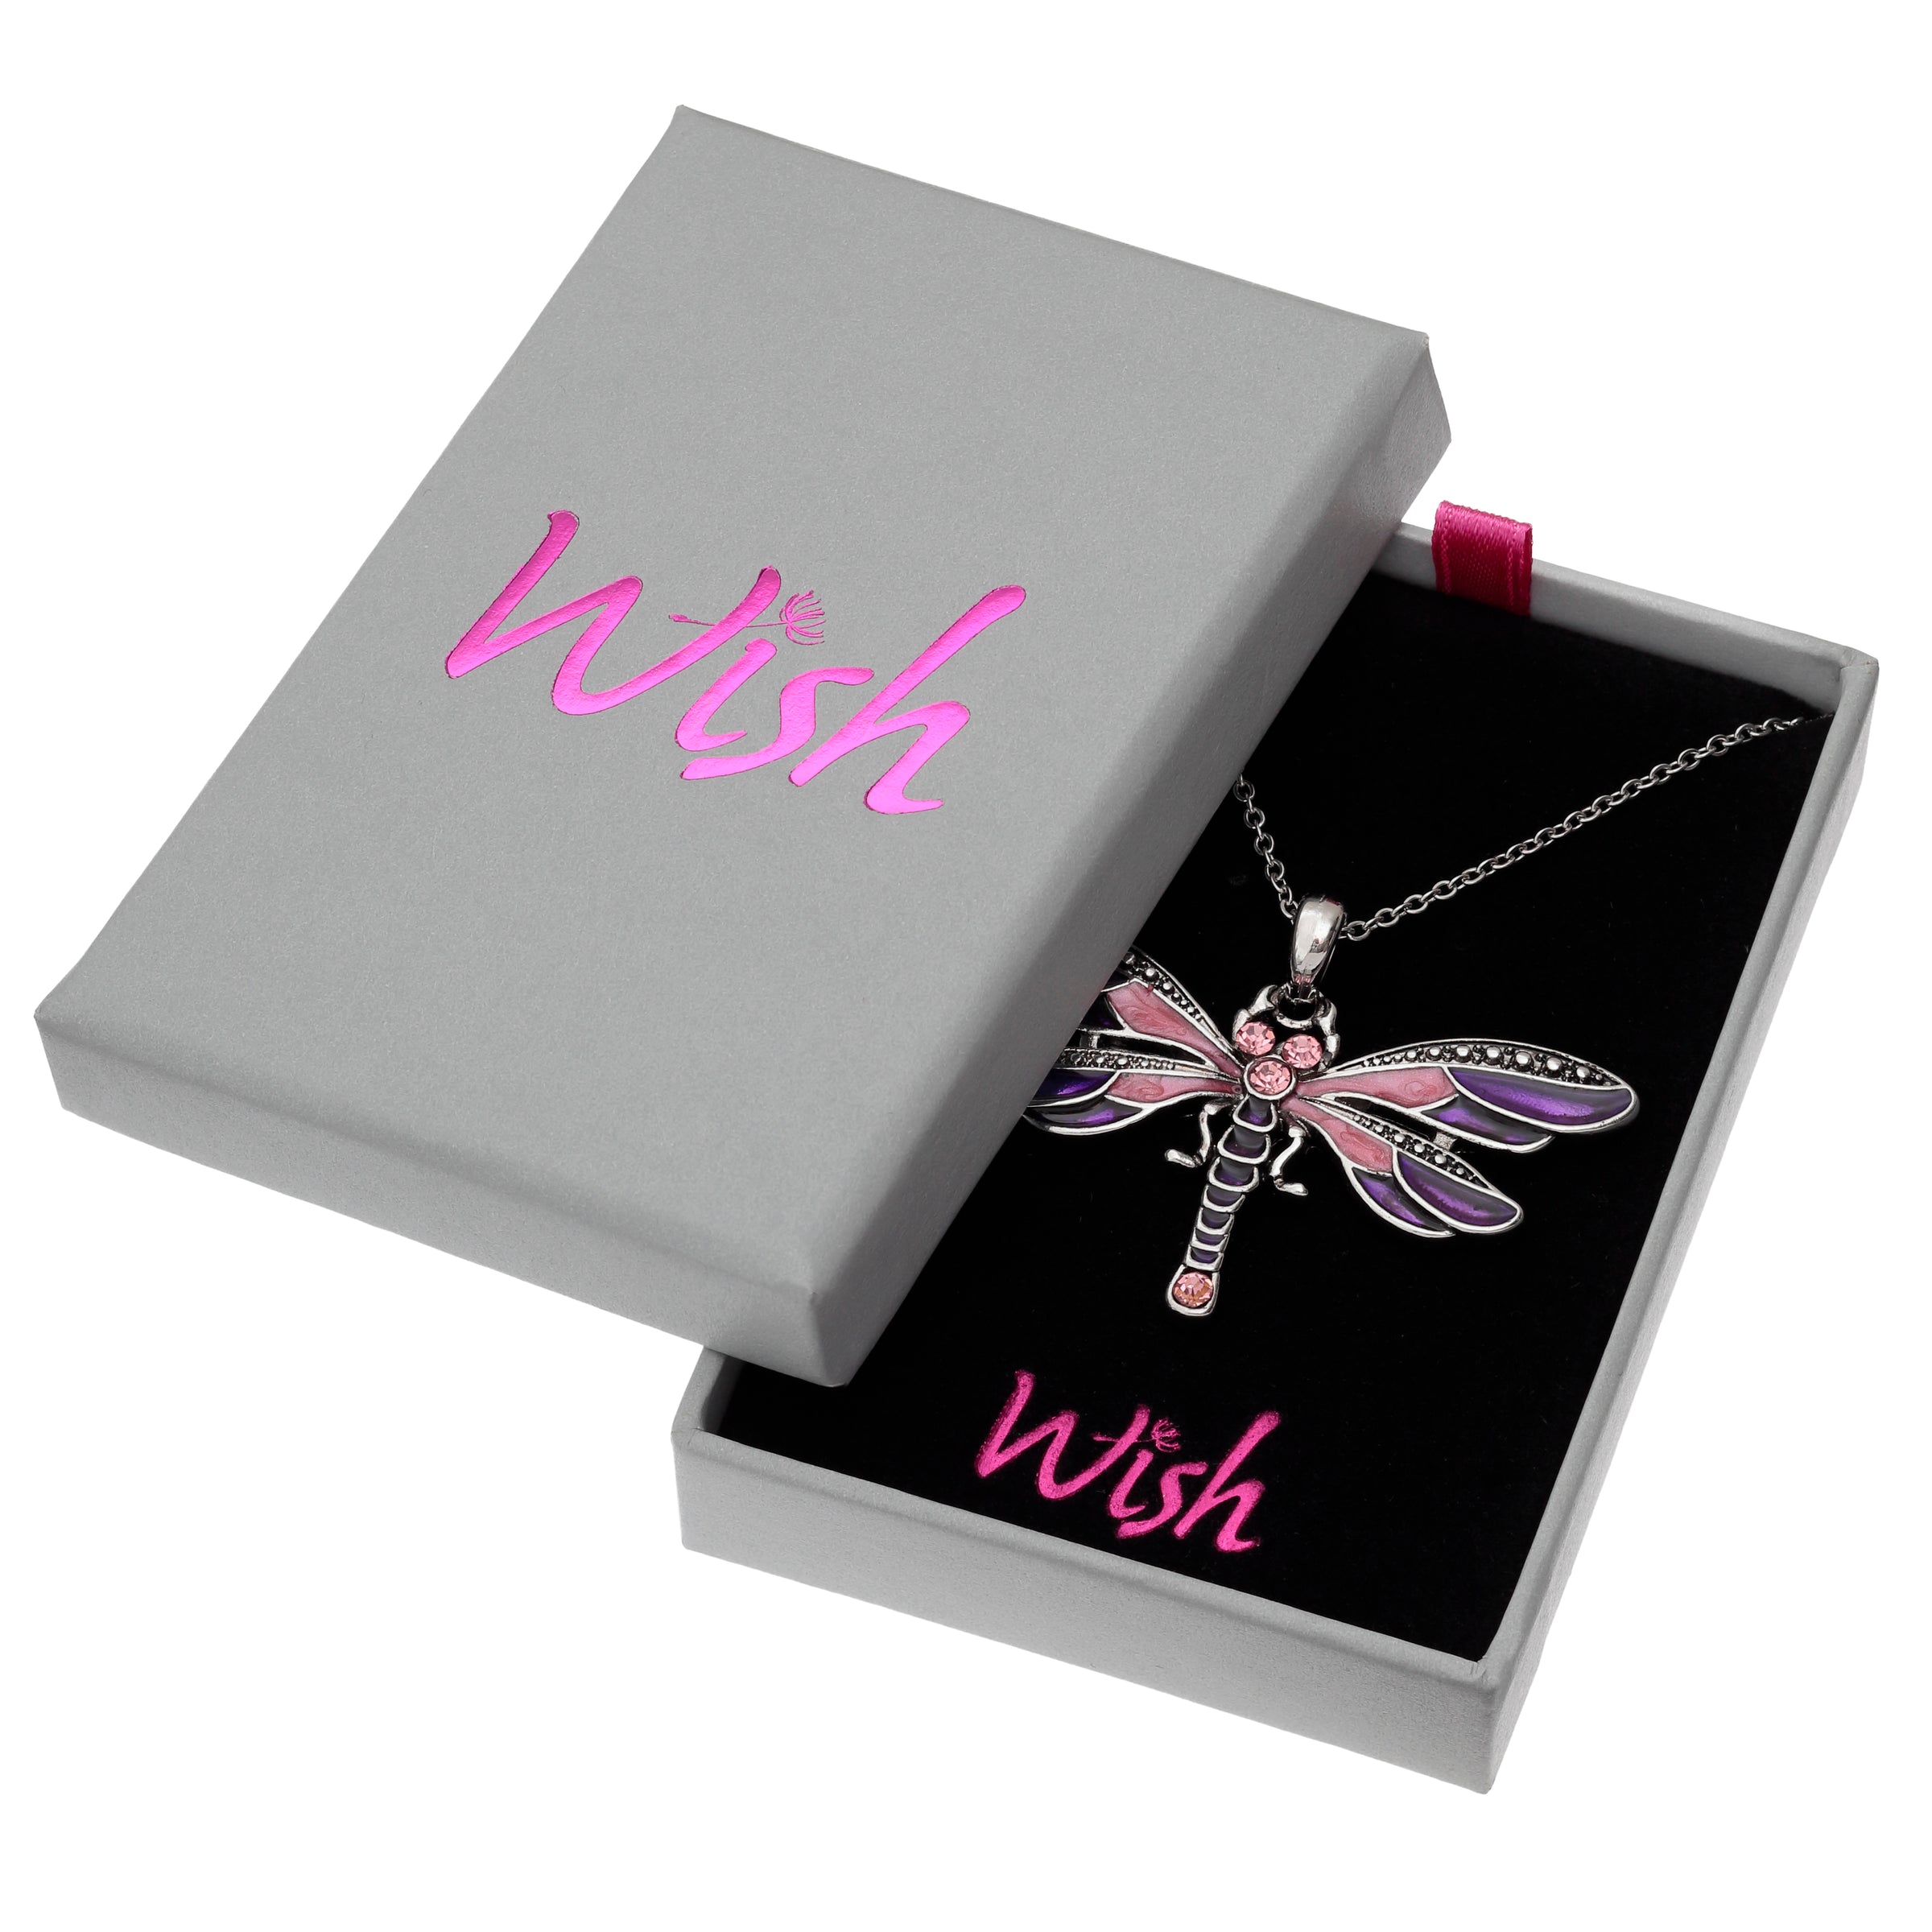 Pink Dragonfly Enamel & Crystal Necklace